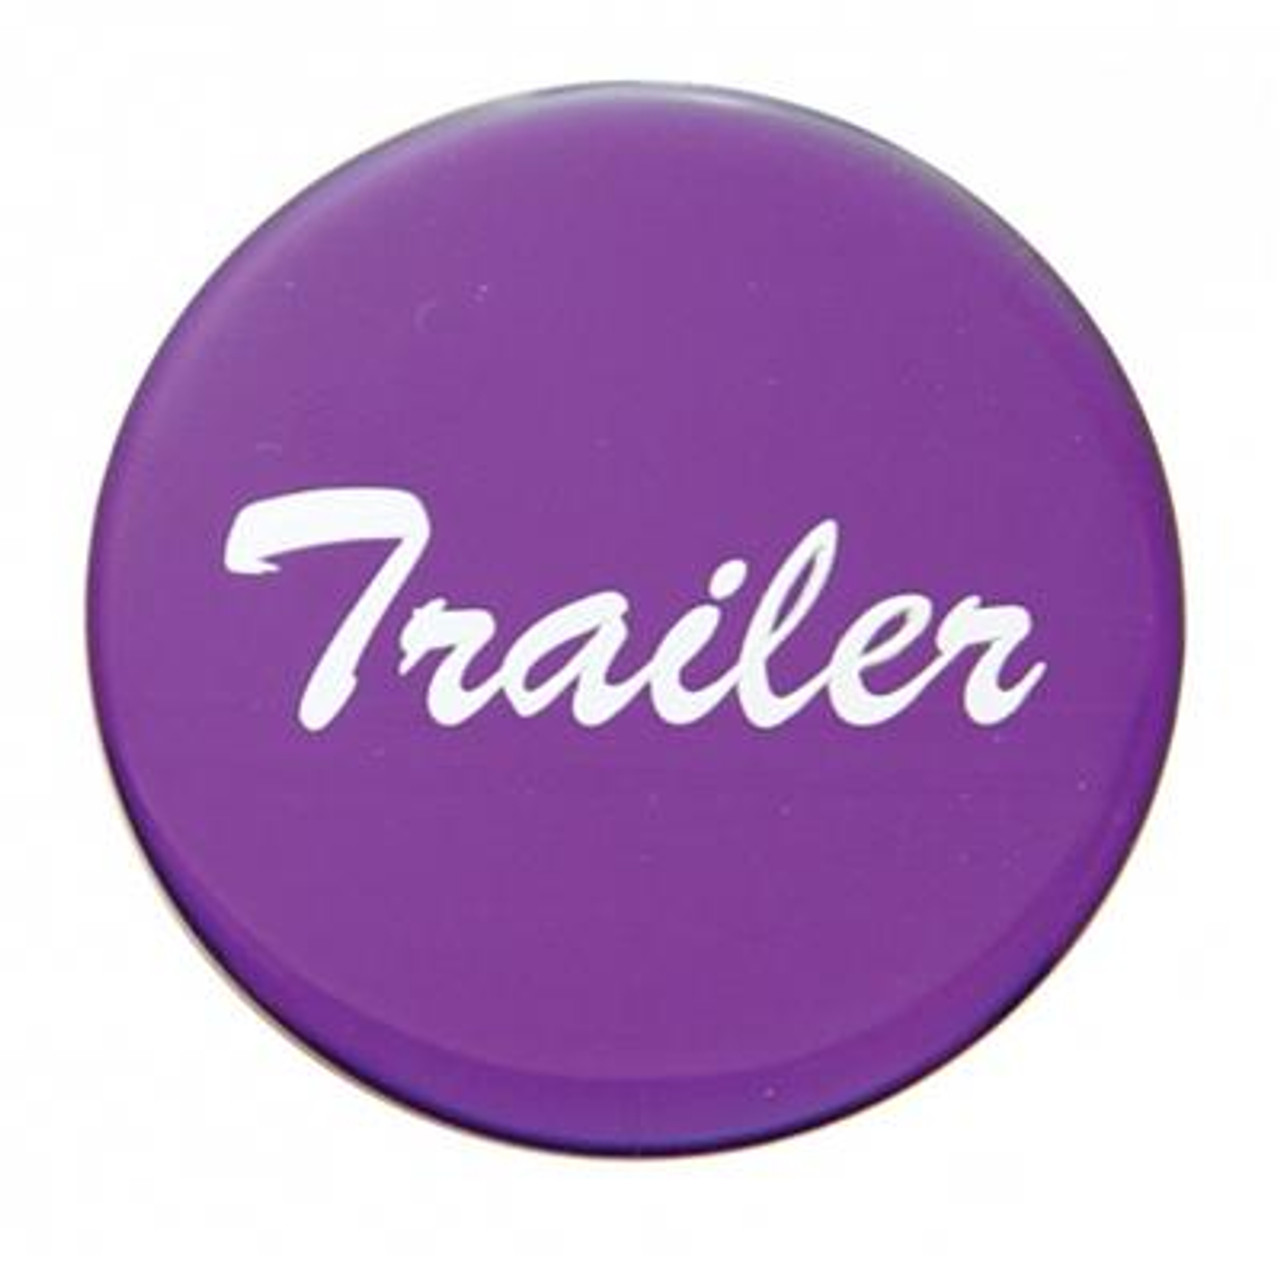 "Trailer" Glossy Air Valve Knob Sticker Only